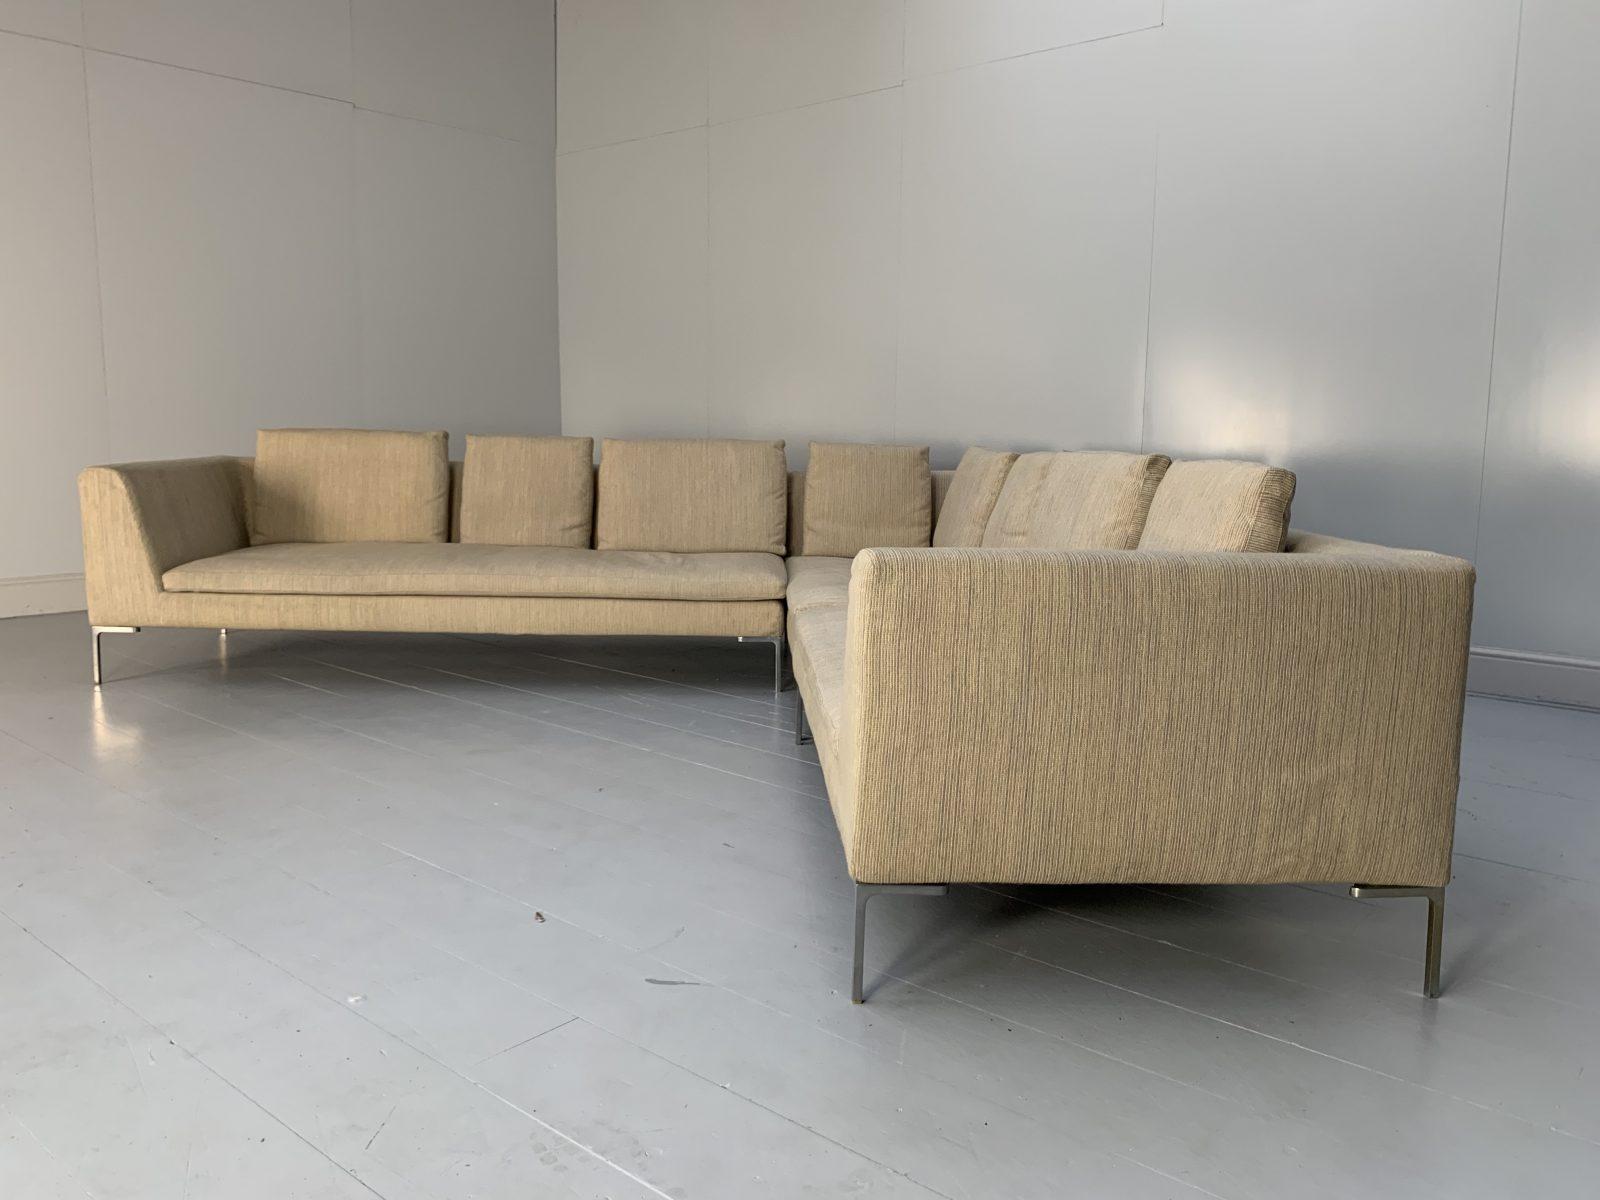 B&B Italia “Charles” L-Shape Sectional Sofa in Stripe Wool For Sale 1